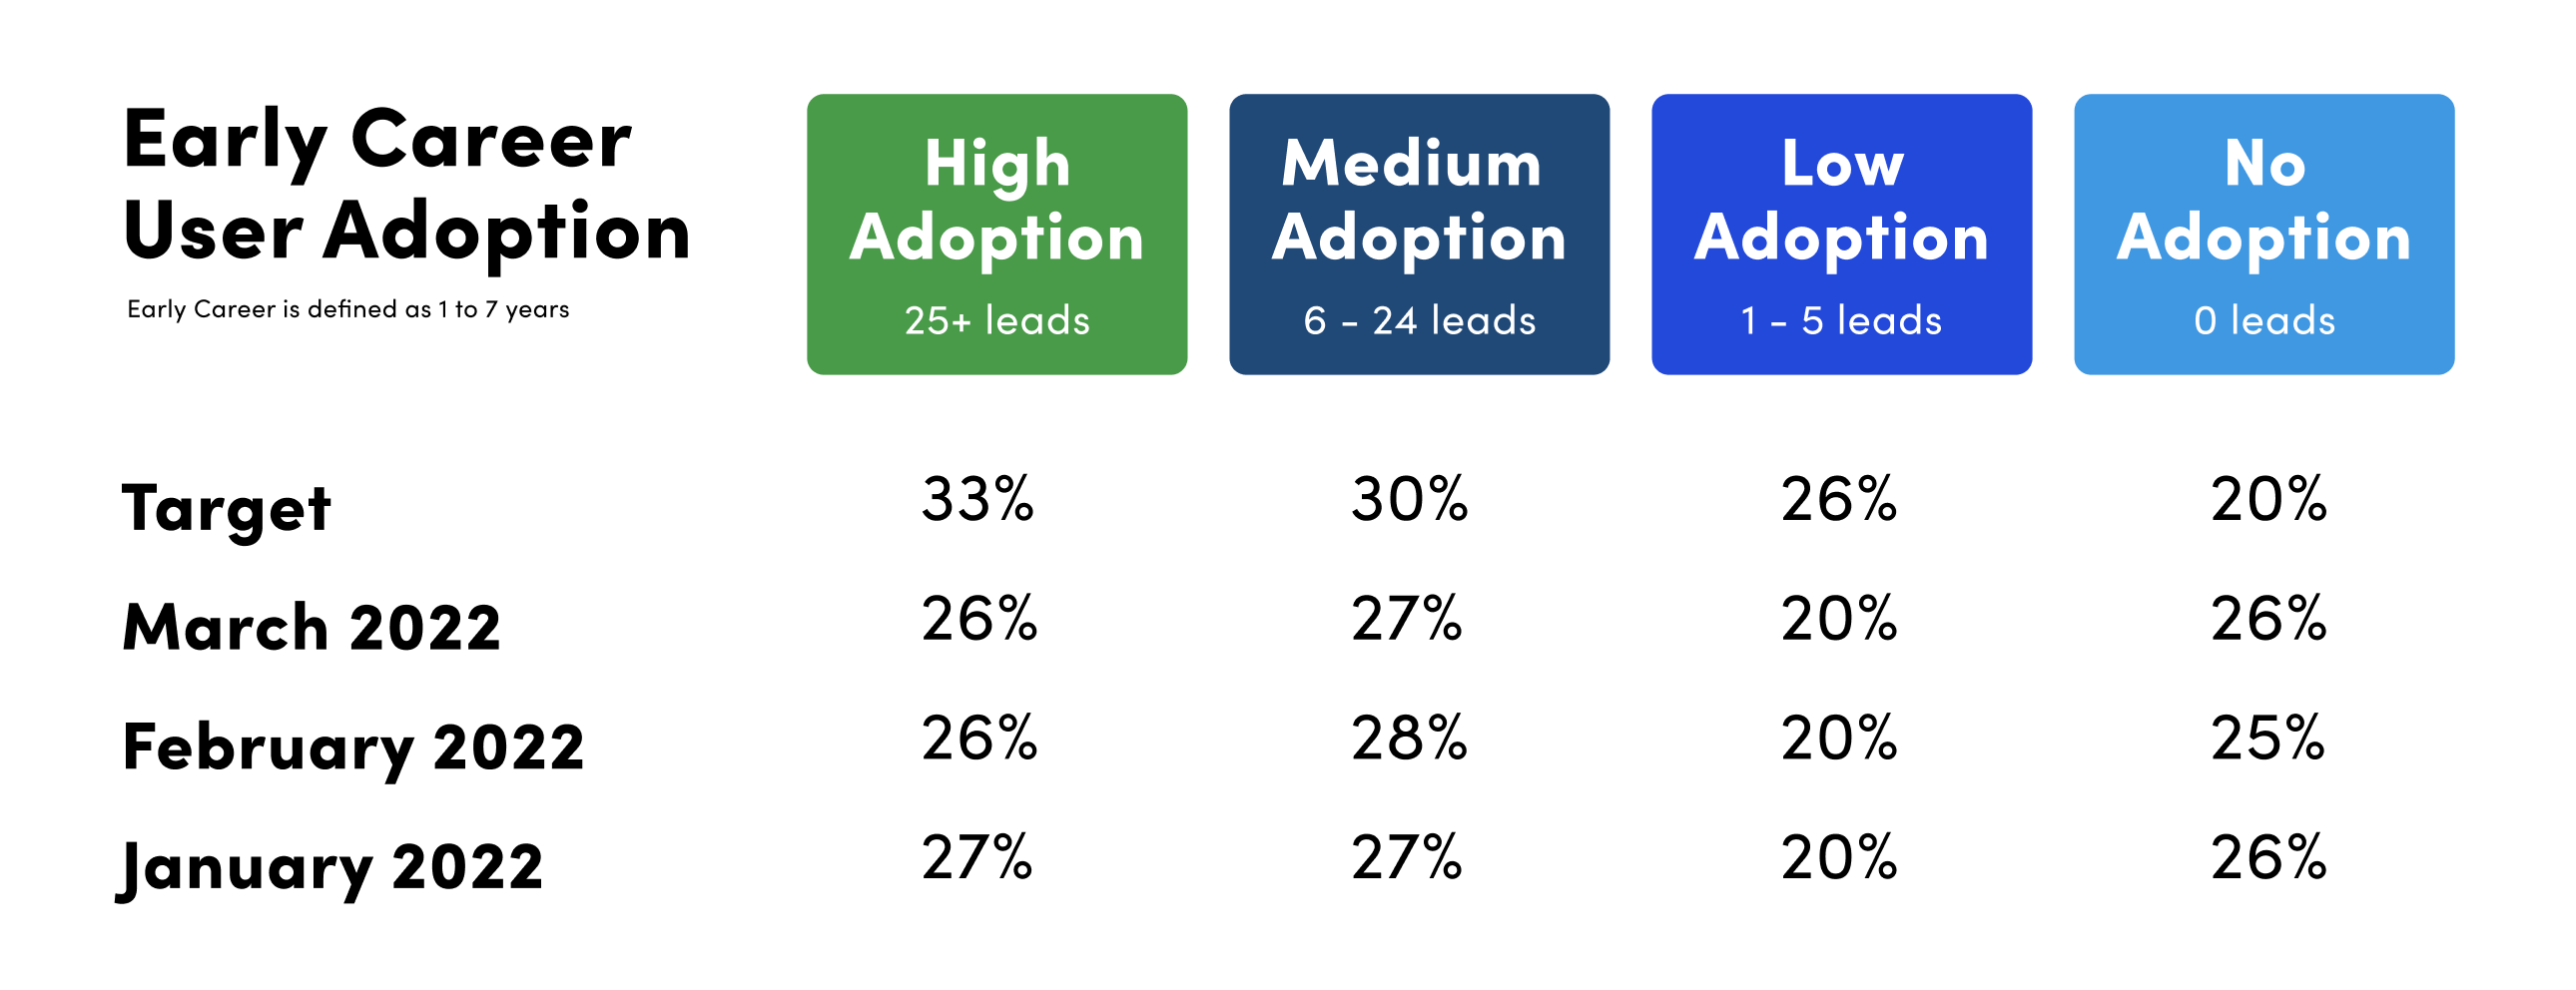 adoption_rate5